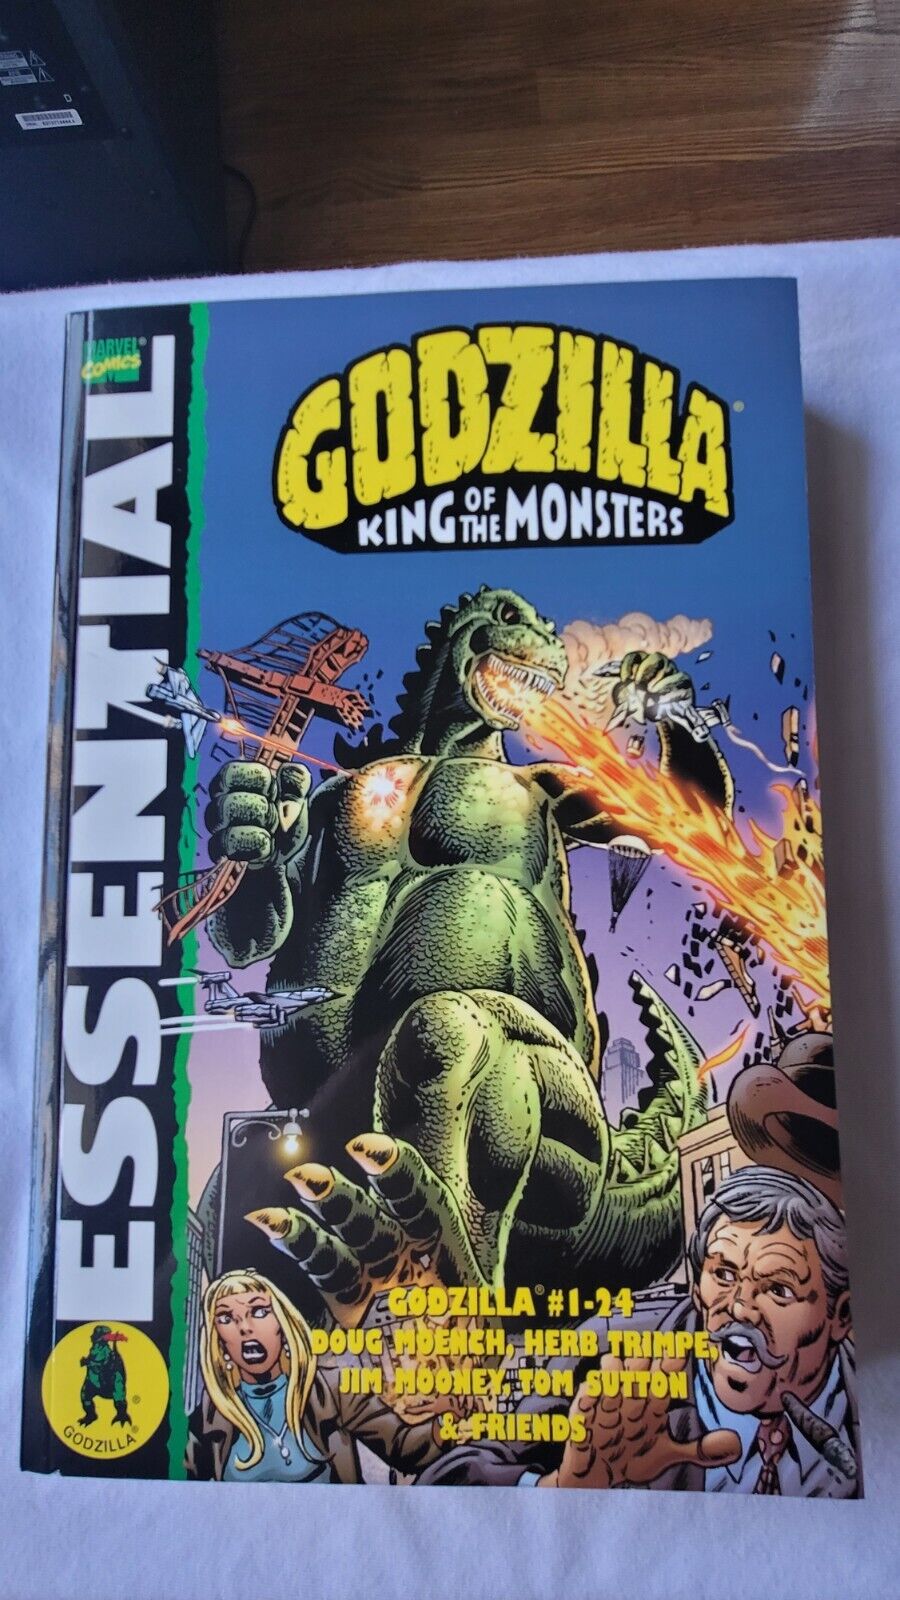 Essential Godzilla Marvel Comics #1-24 Avengers Fantastic Four Spider-Man Fury